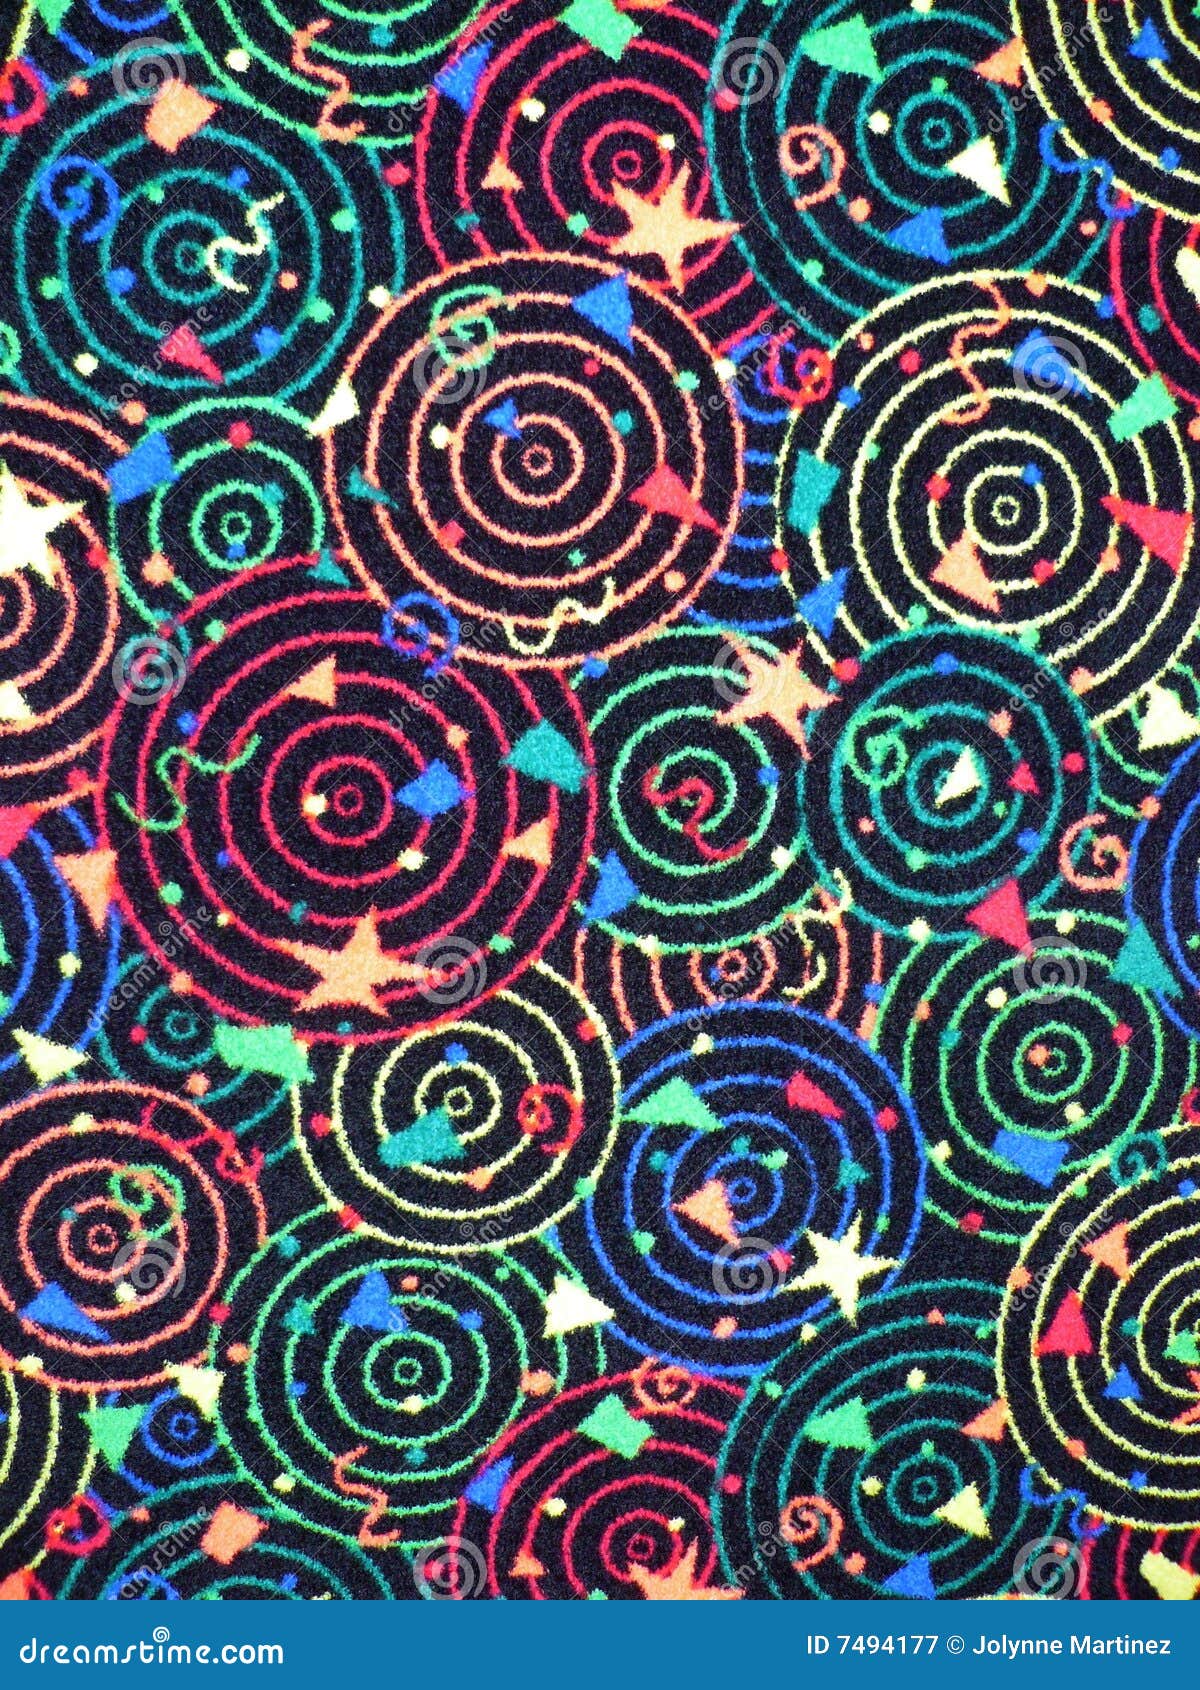 Wild Carpet Pattern stock image. Image of spirals, stars - 7494177